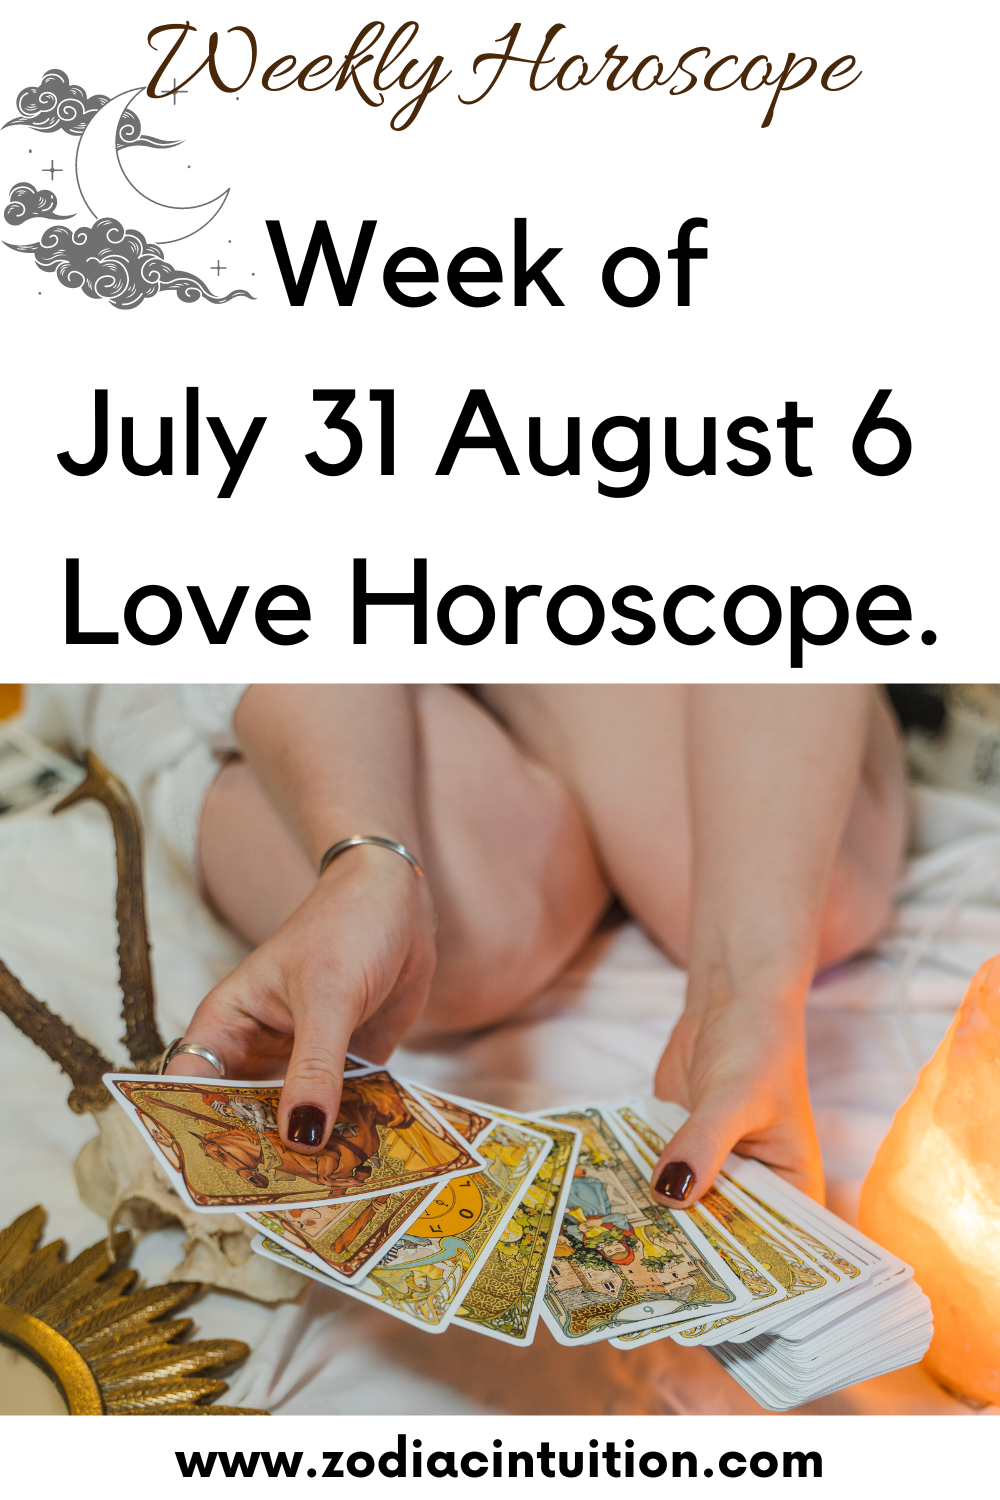 Week of July 31 August 6 Love Horoscope.